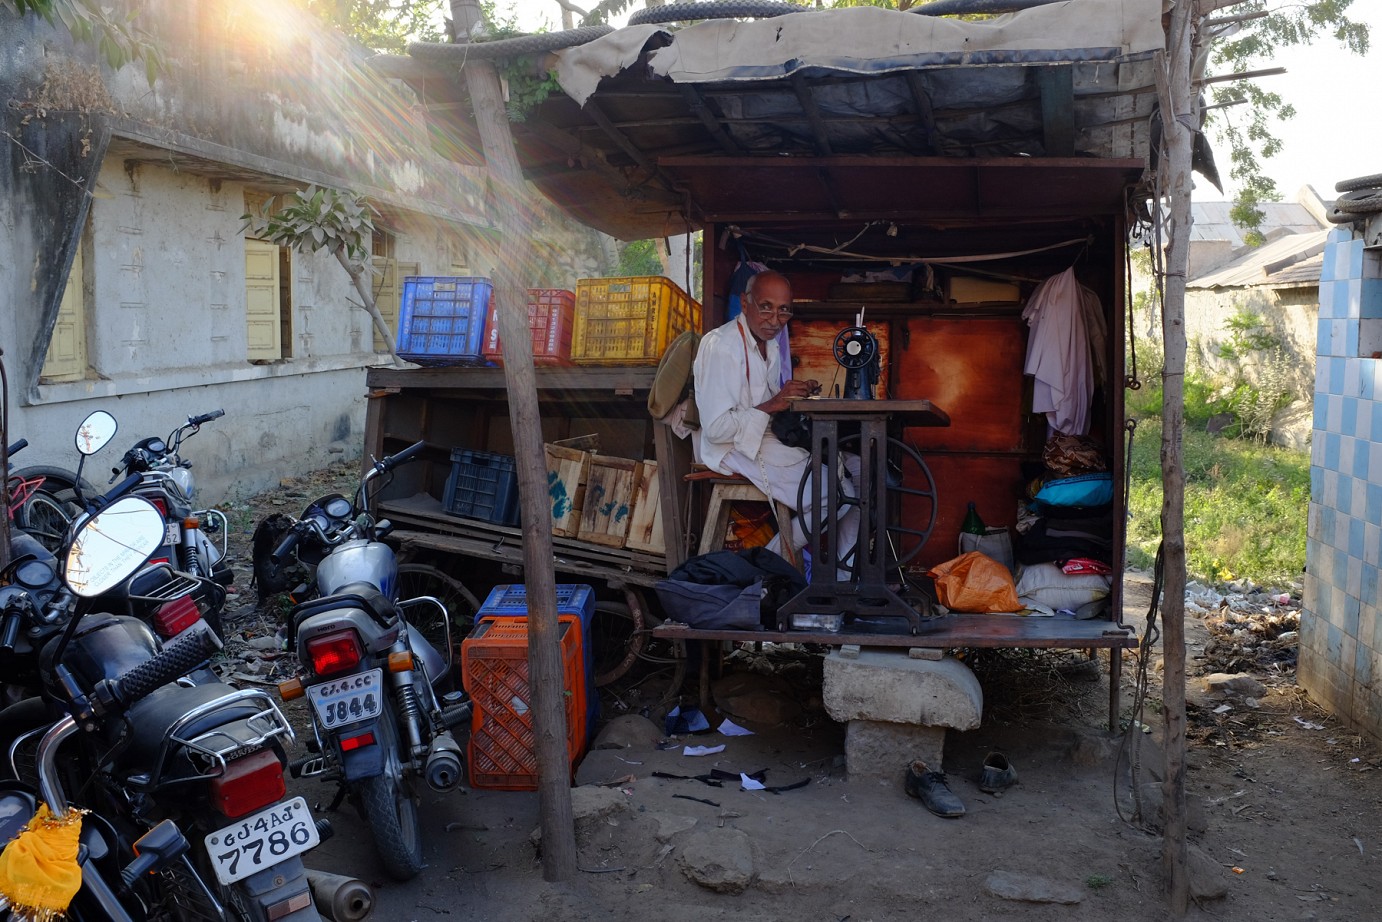 elderly tailor in his shack-workshop